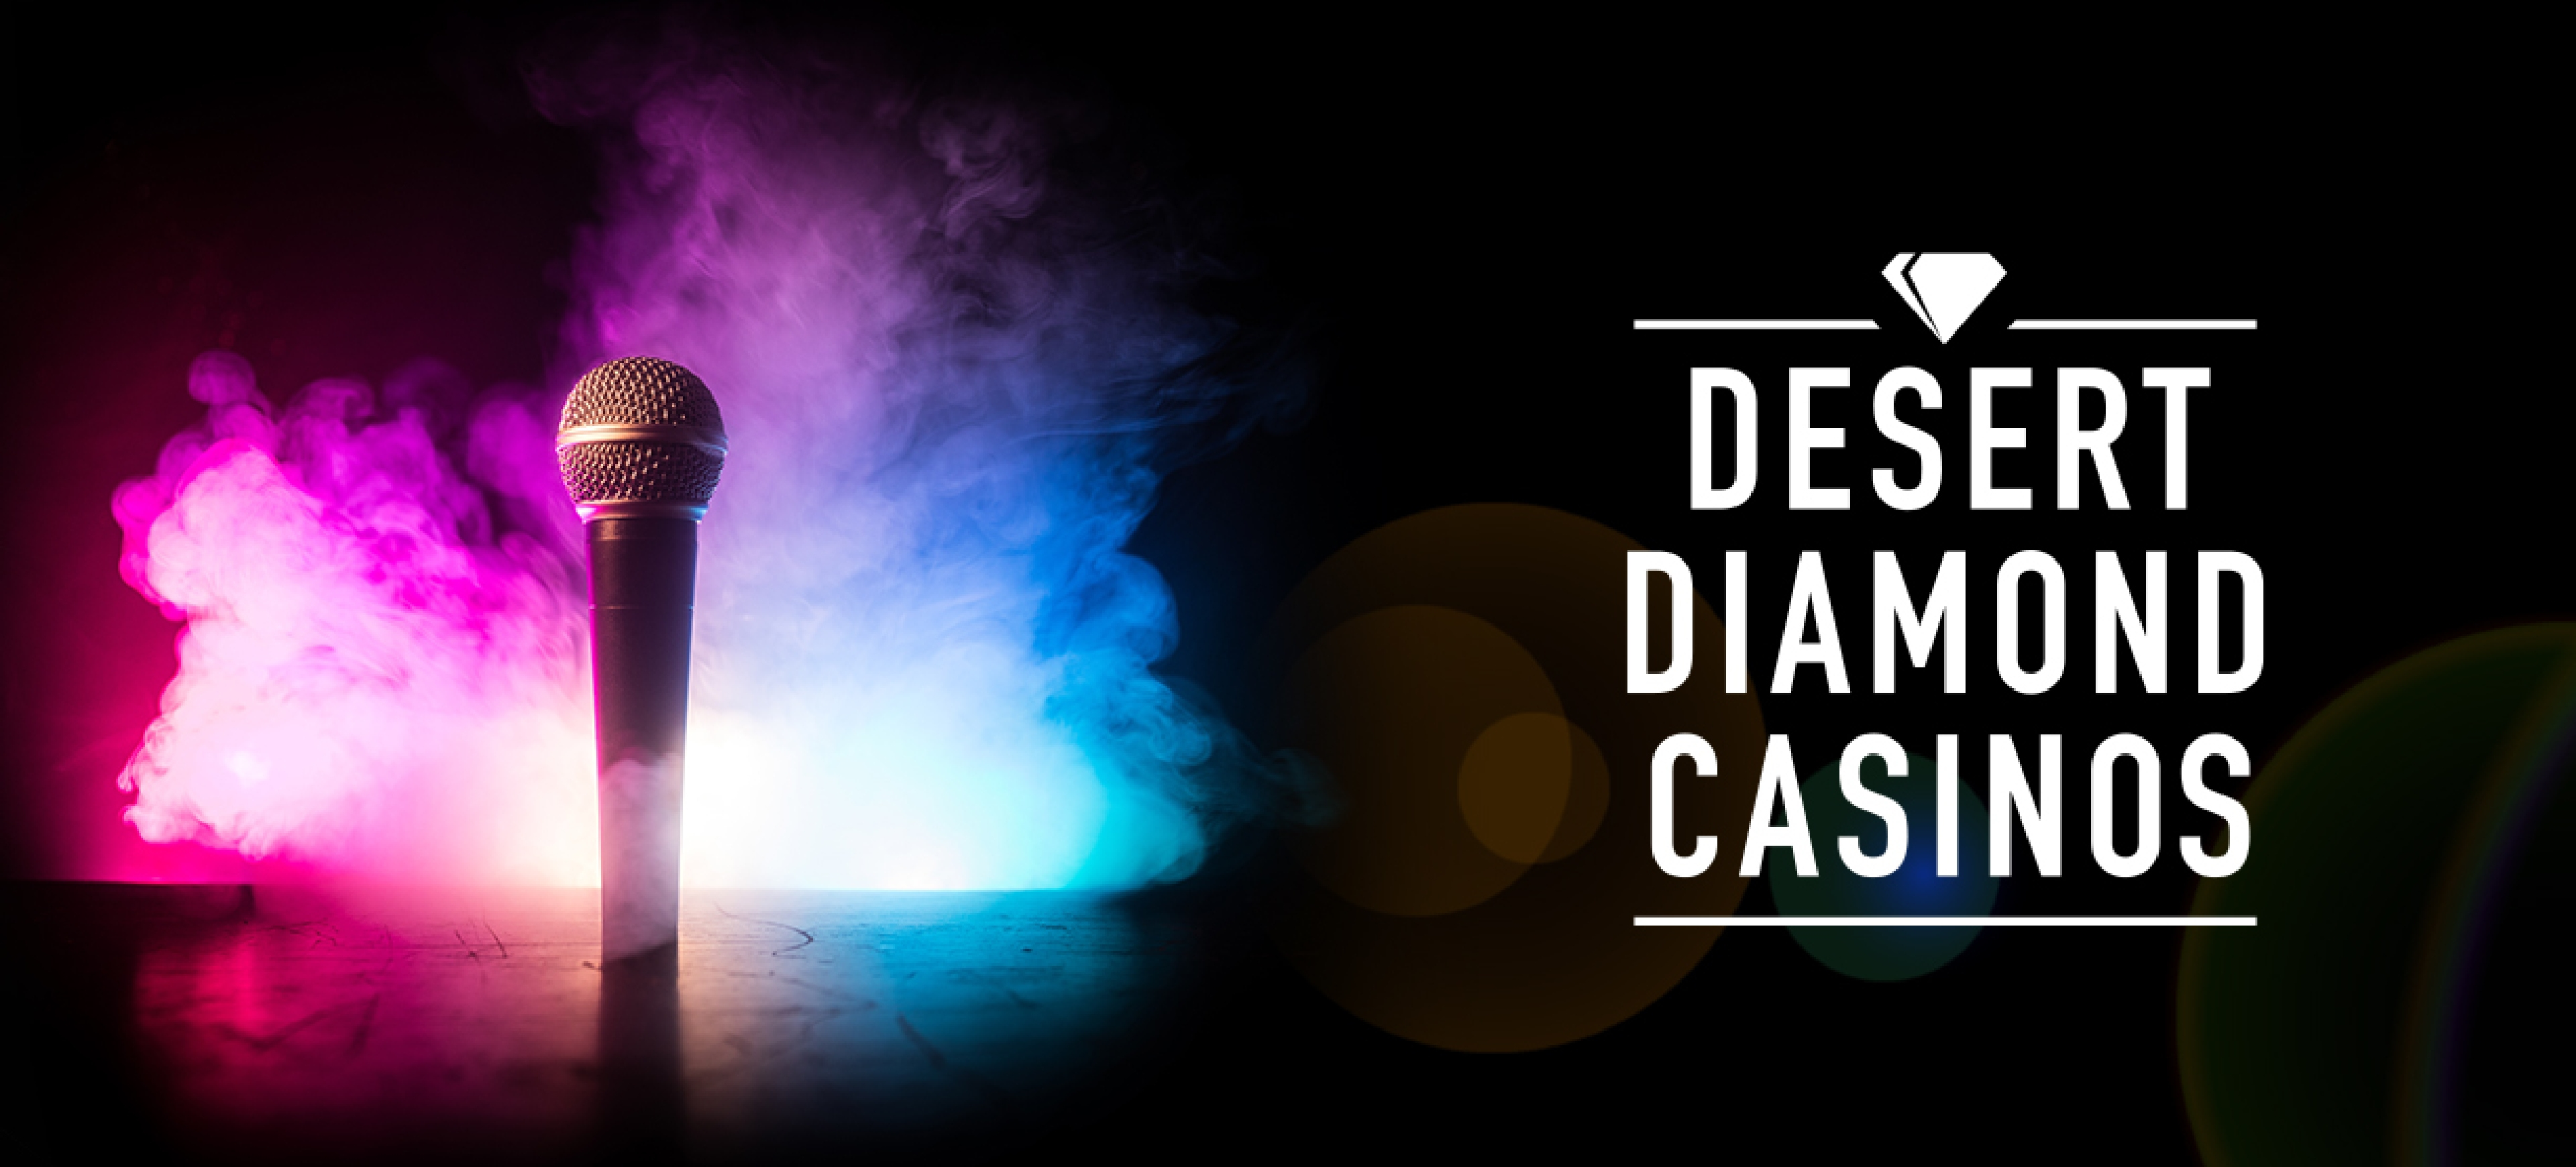 Desert Diamond Casino Press Room